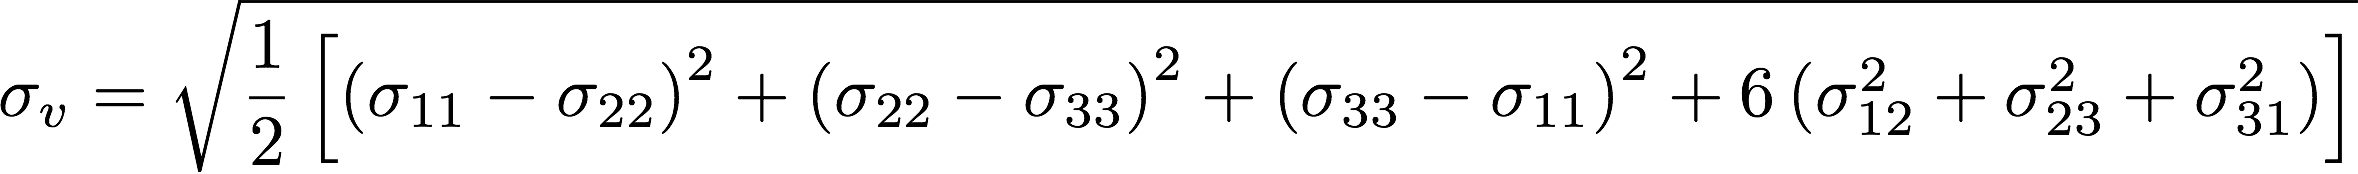 von Mises stress equation